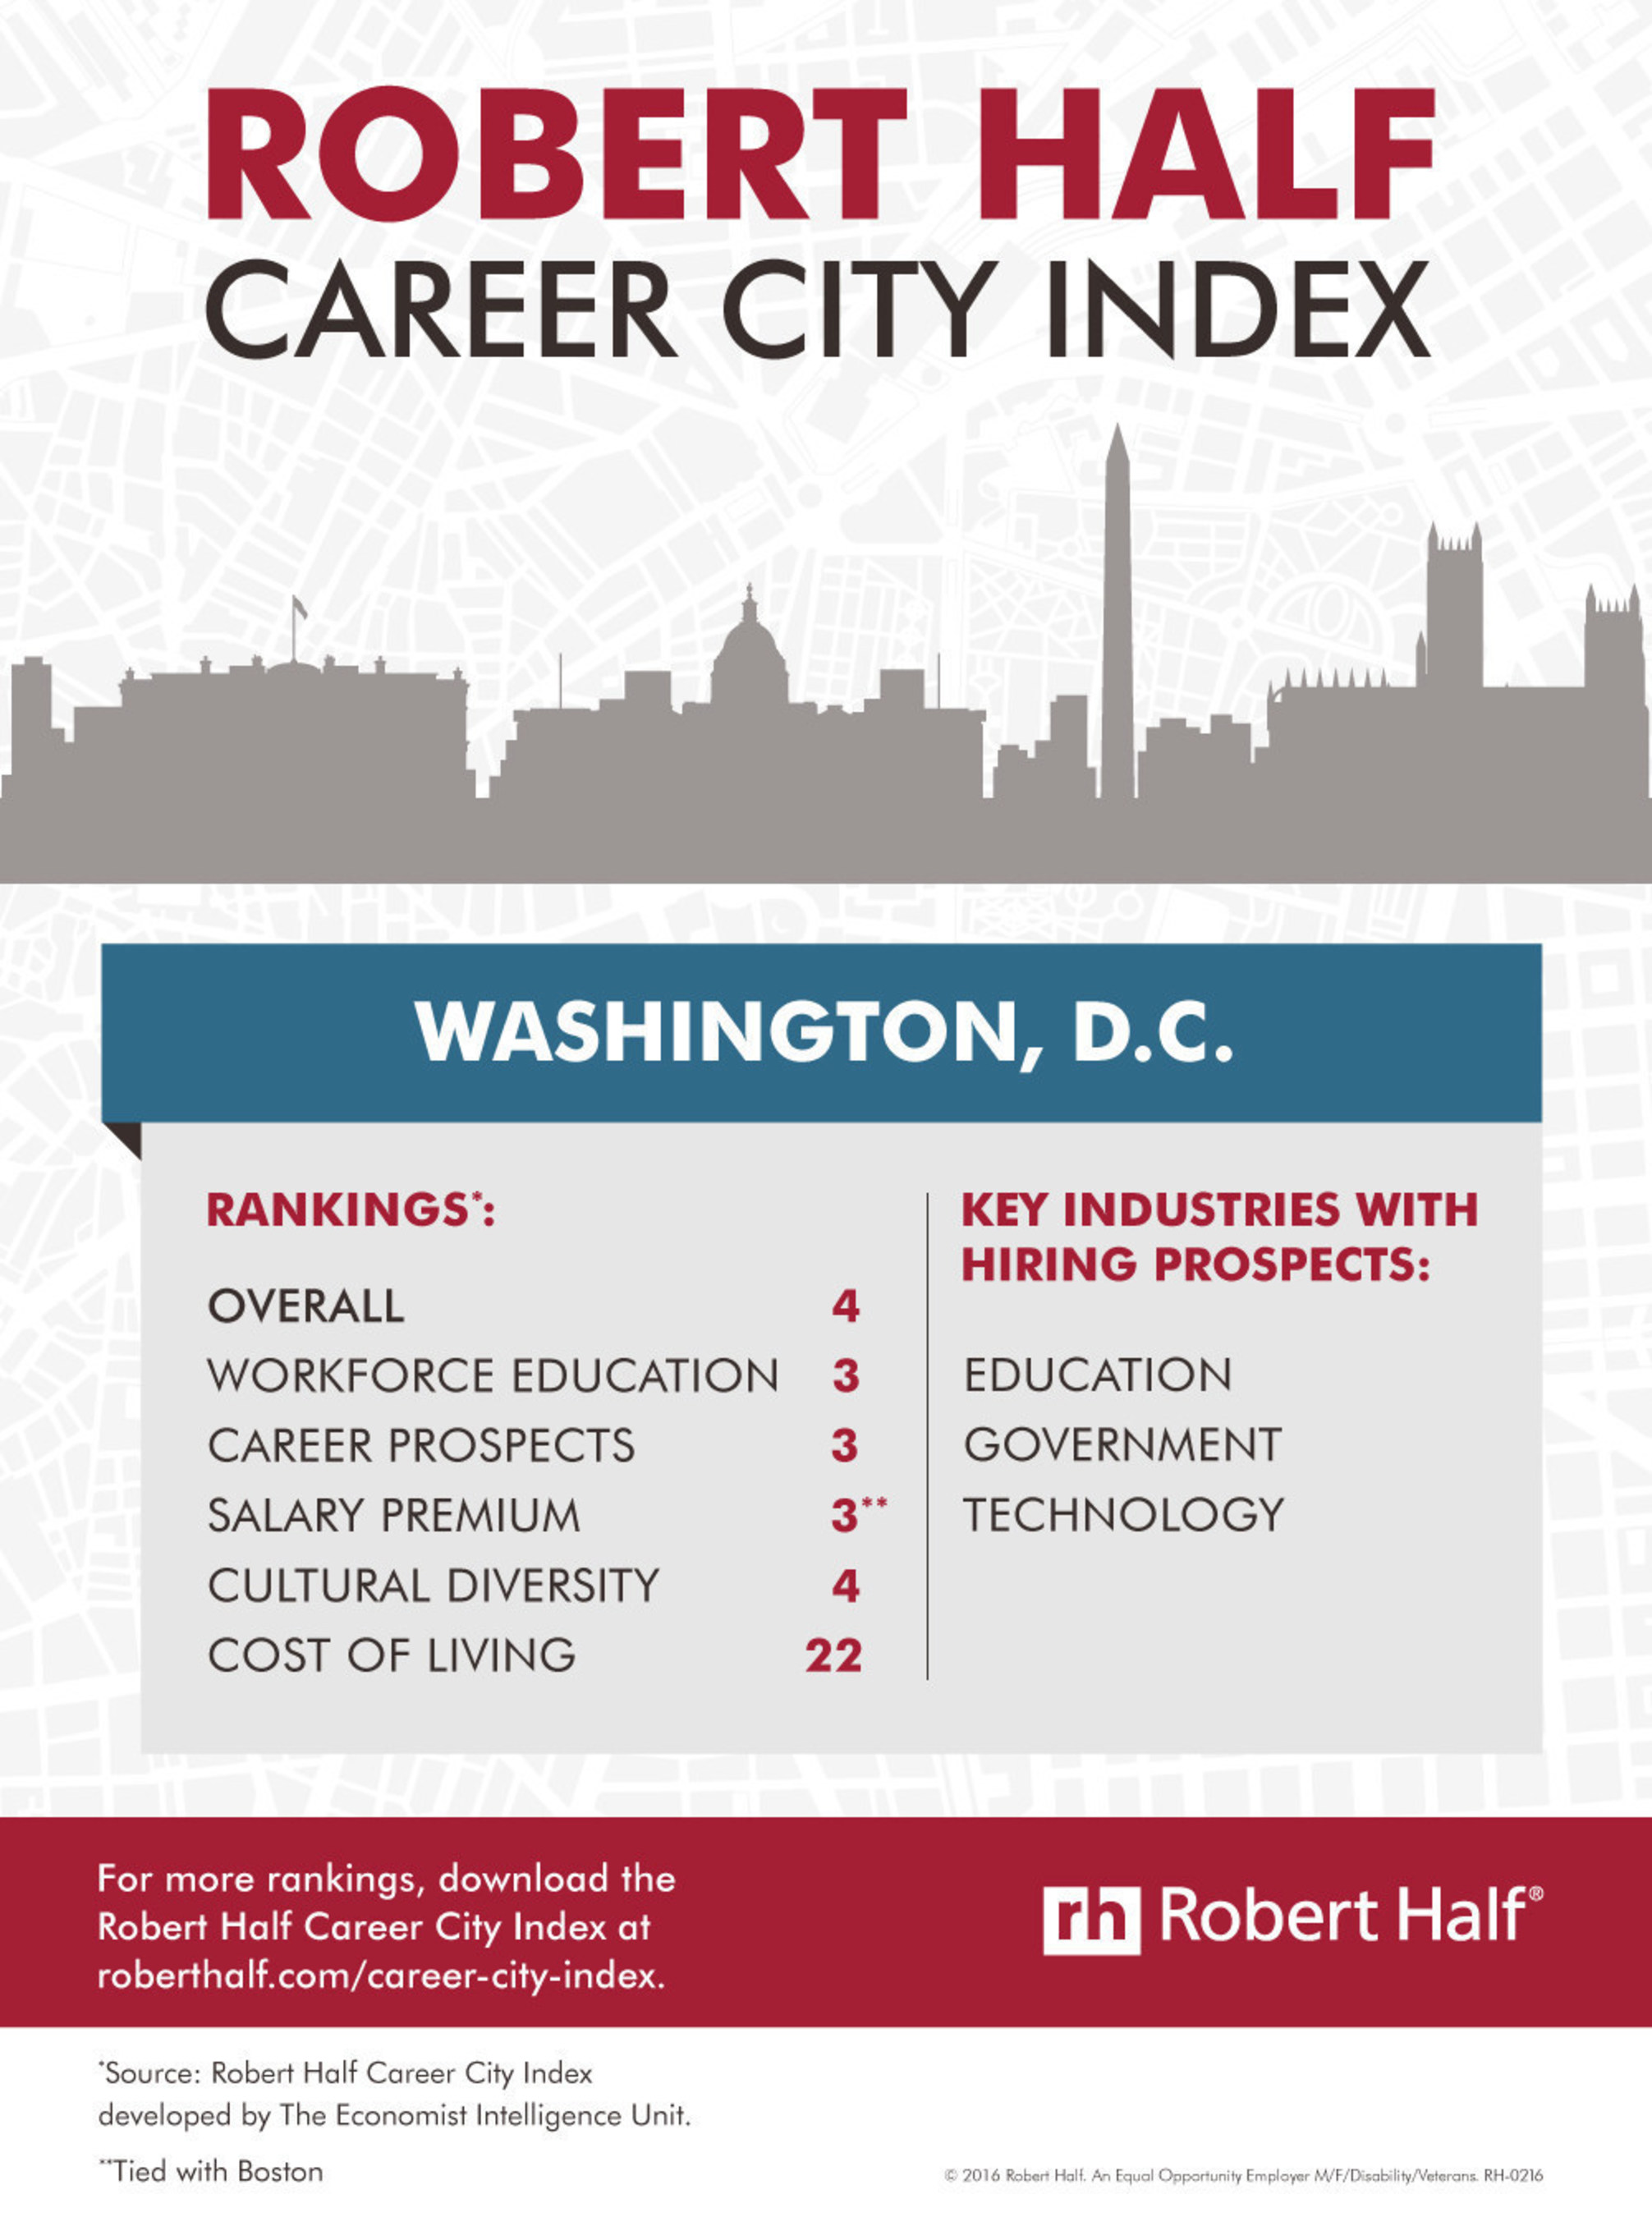 Washington, D.C. Career City Index Rankings